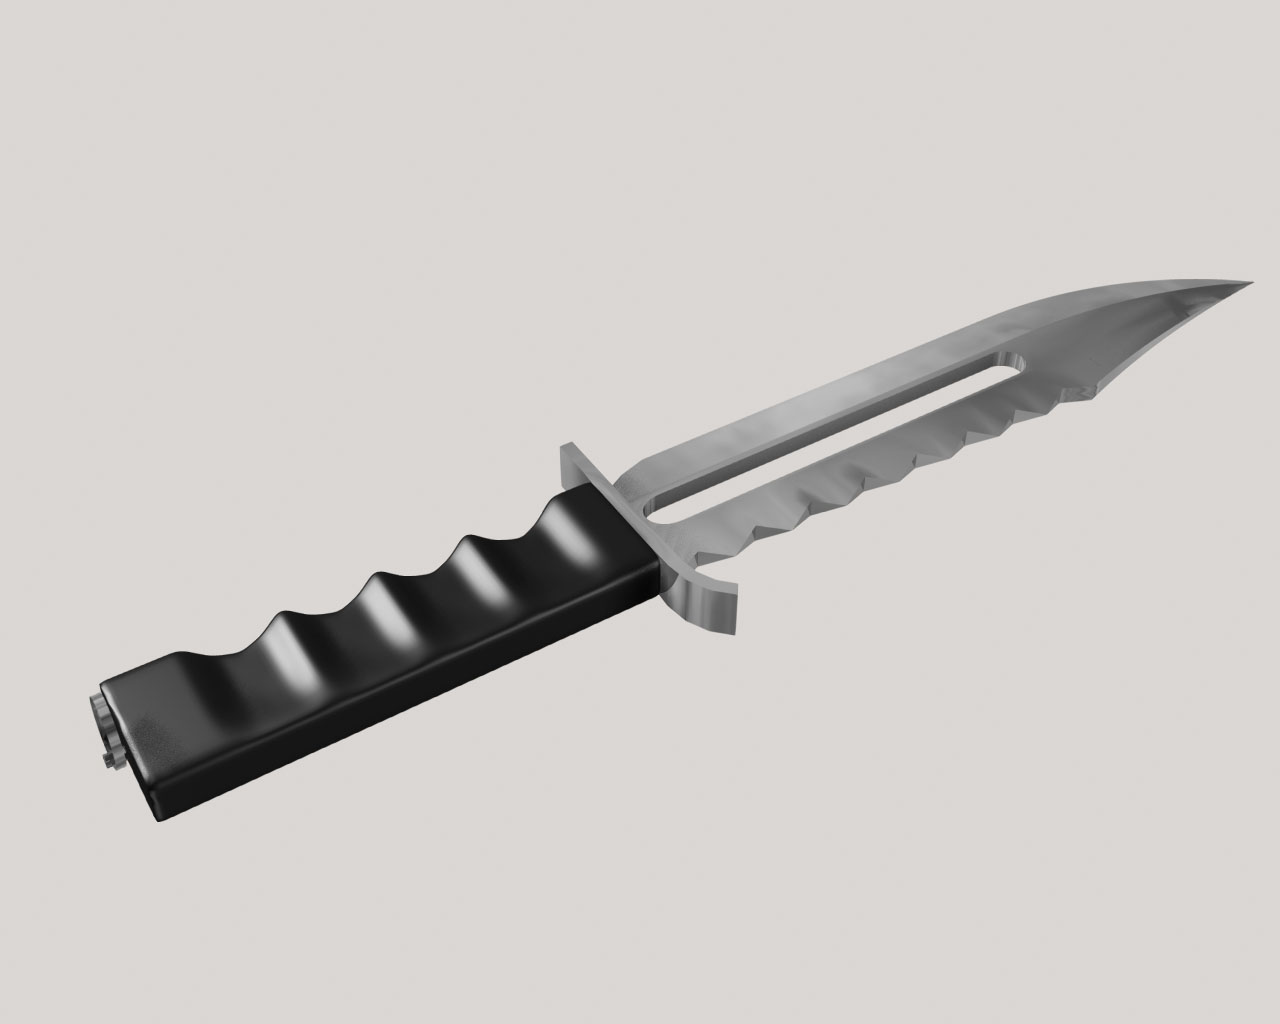 Vibroknife